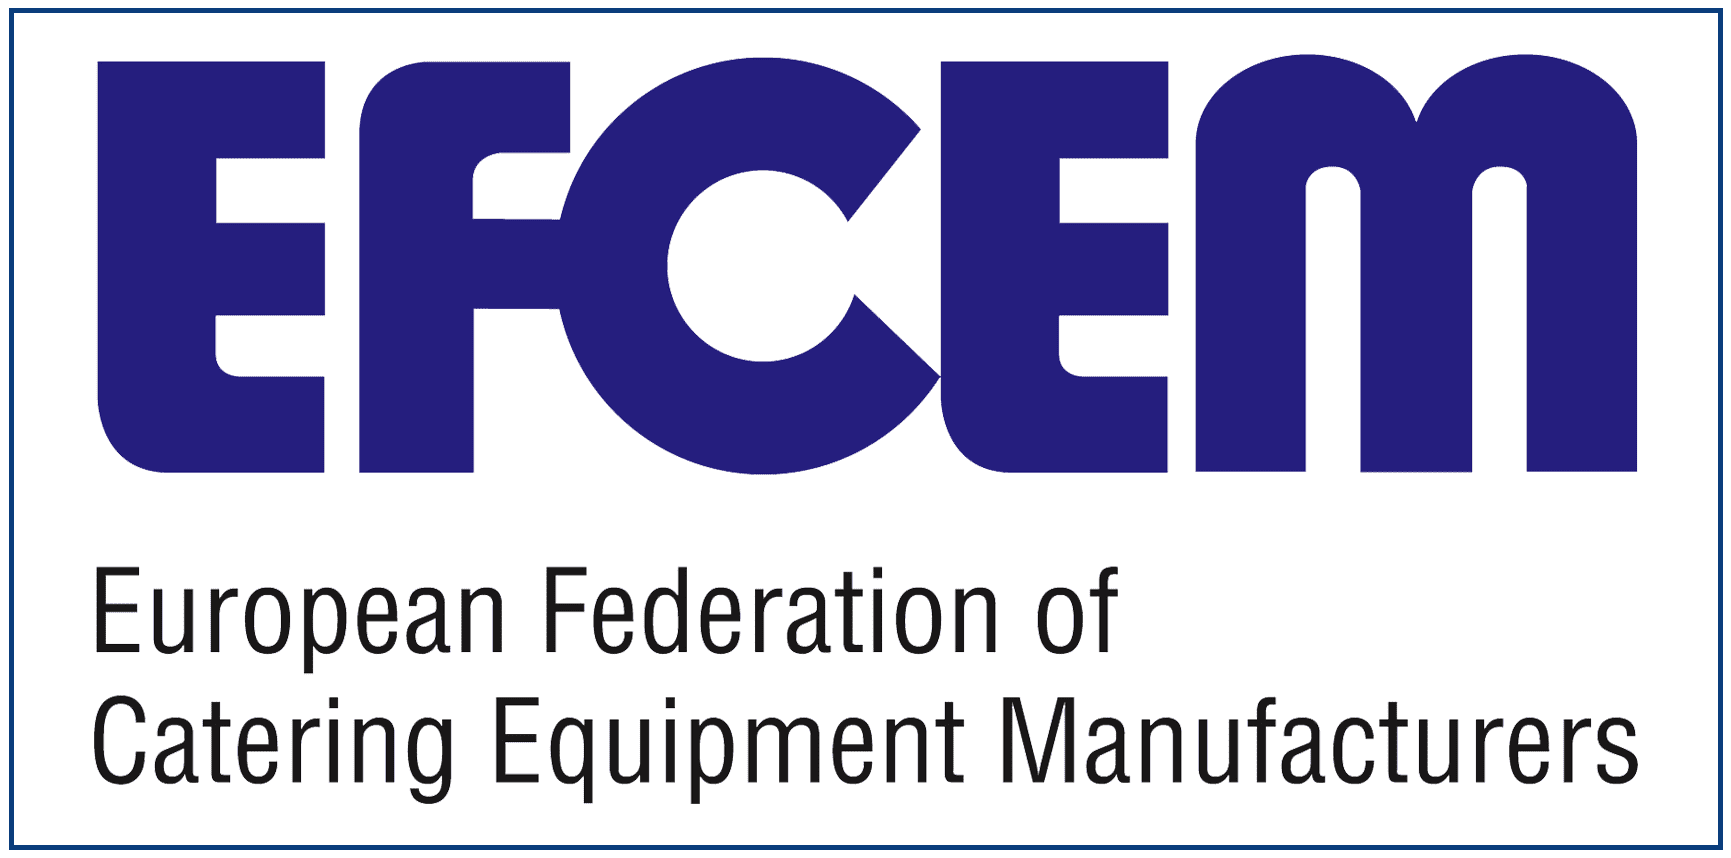 EFCEM logo in box